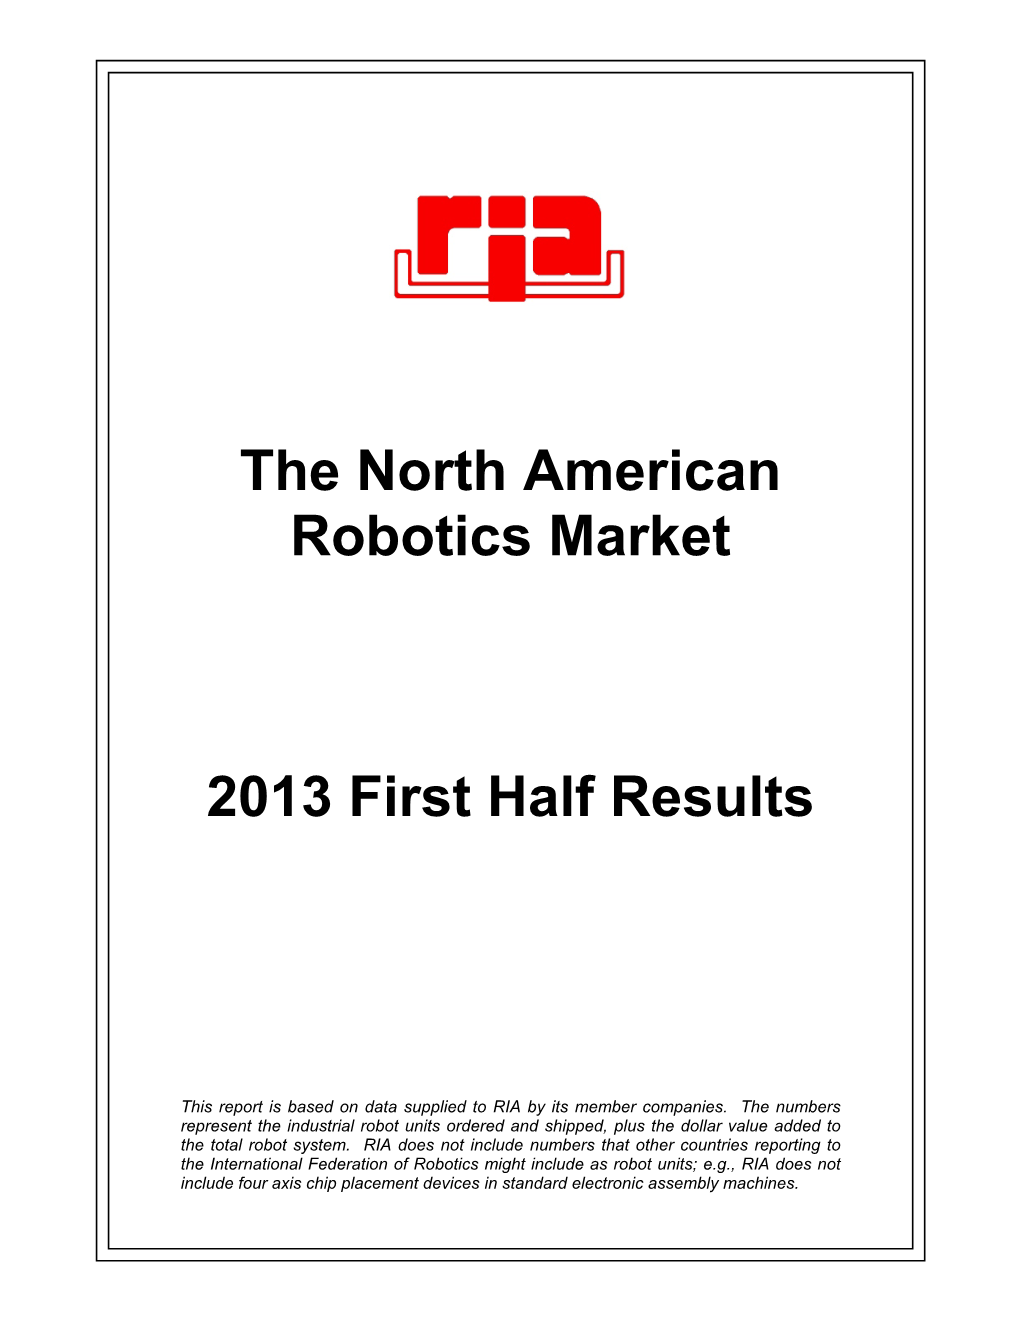 The North American Robotics Market 2013 First Half Results